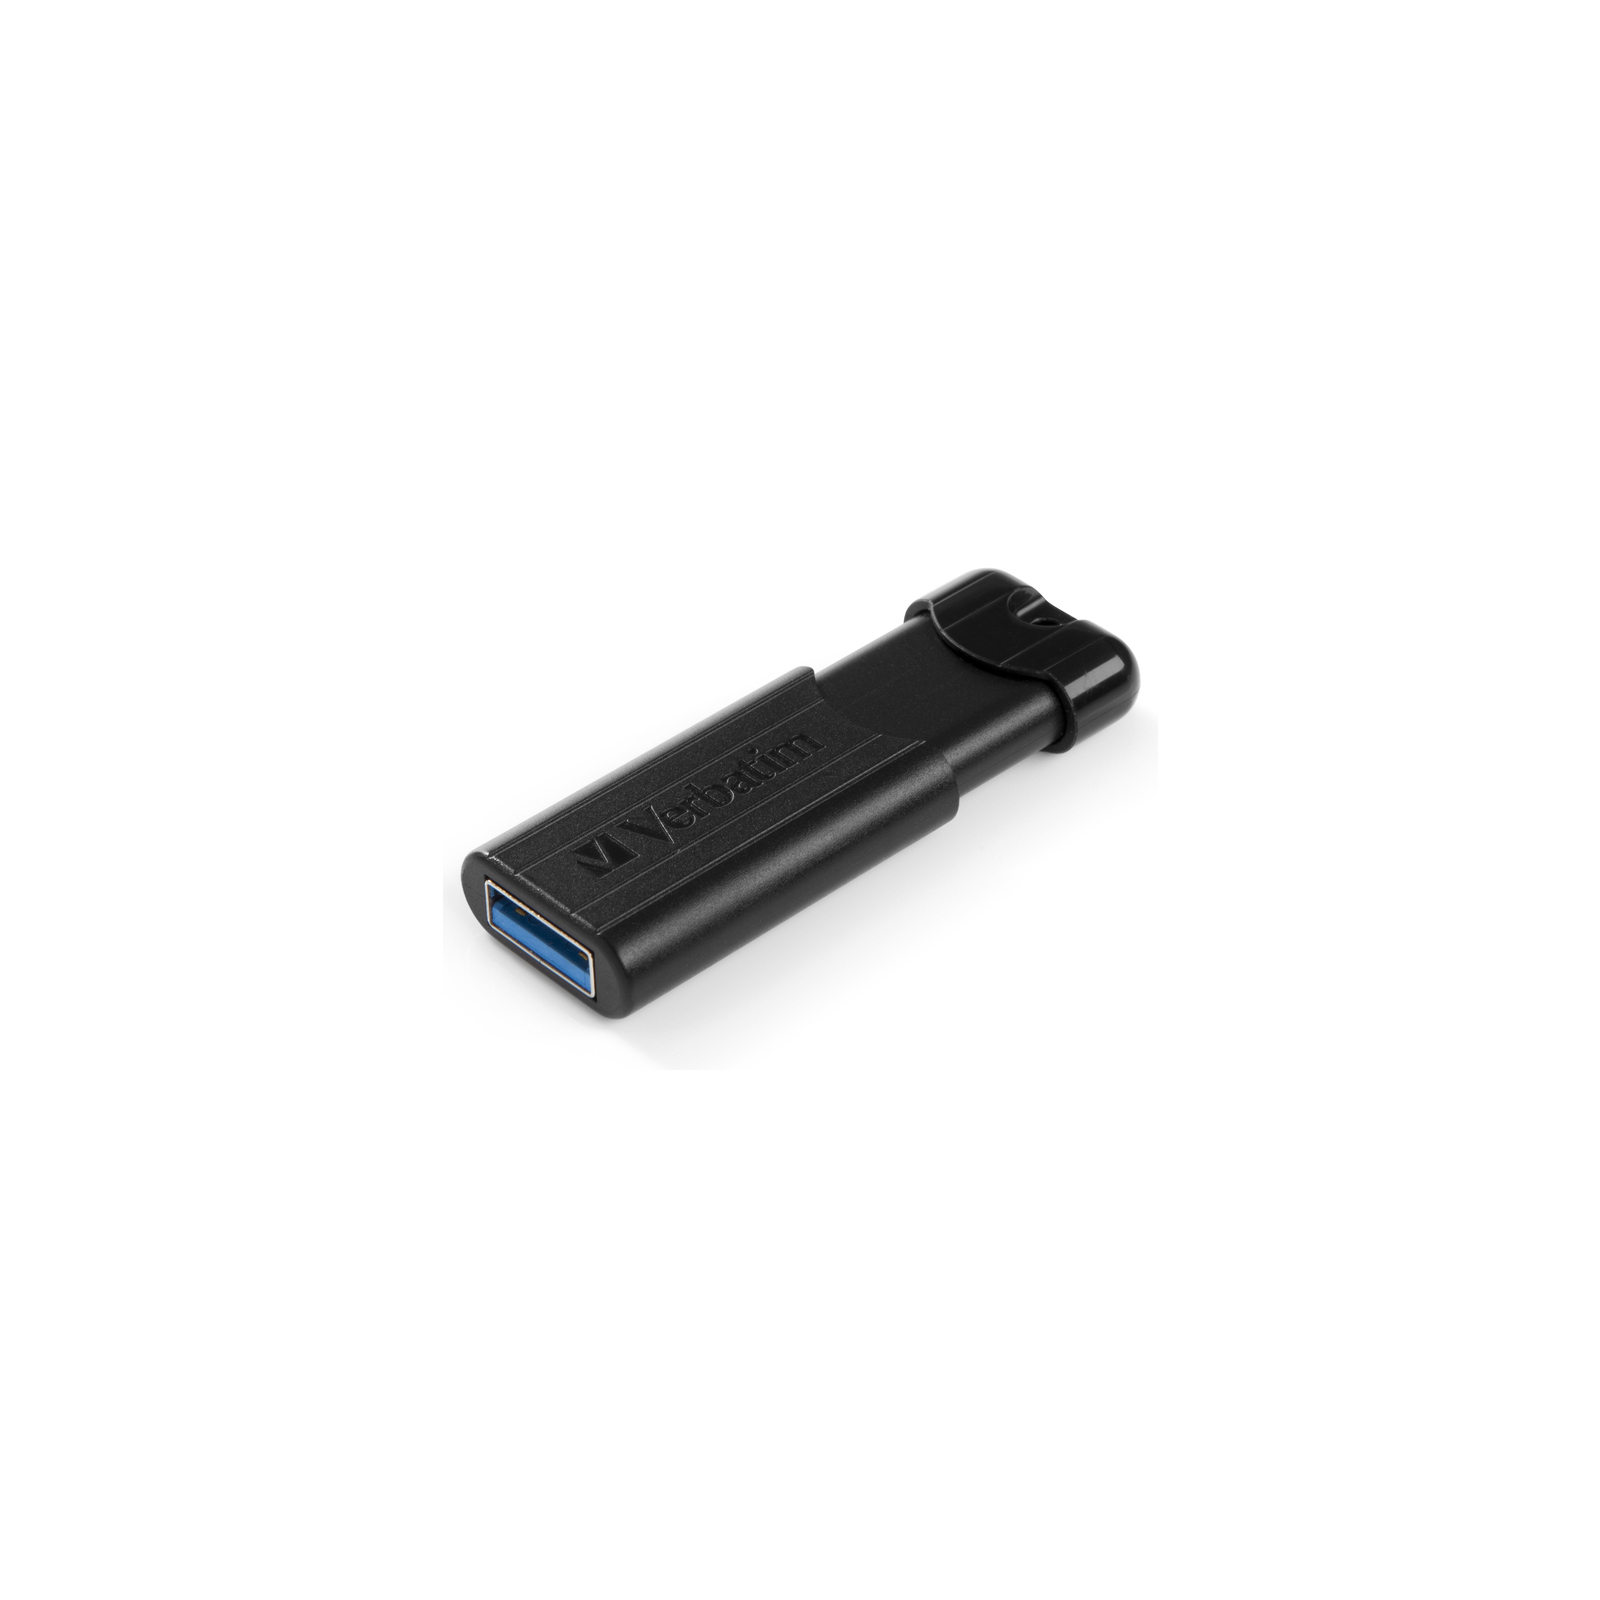 USB флеш накопитель Verbatim 256GB PinStripe Black USB 3.0 (49320) изображение 3